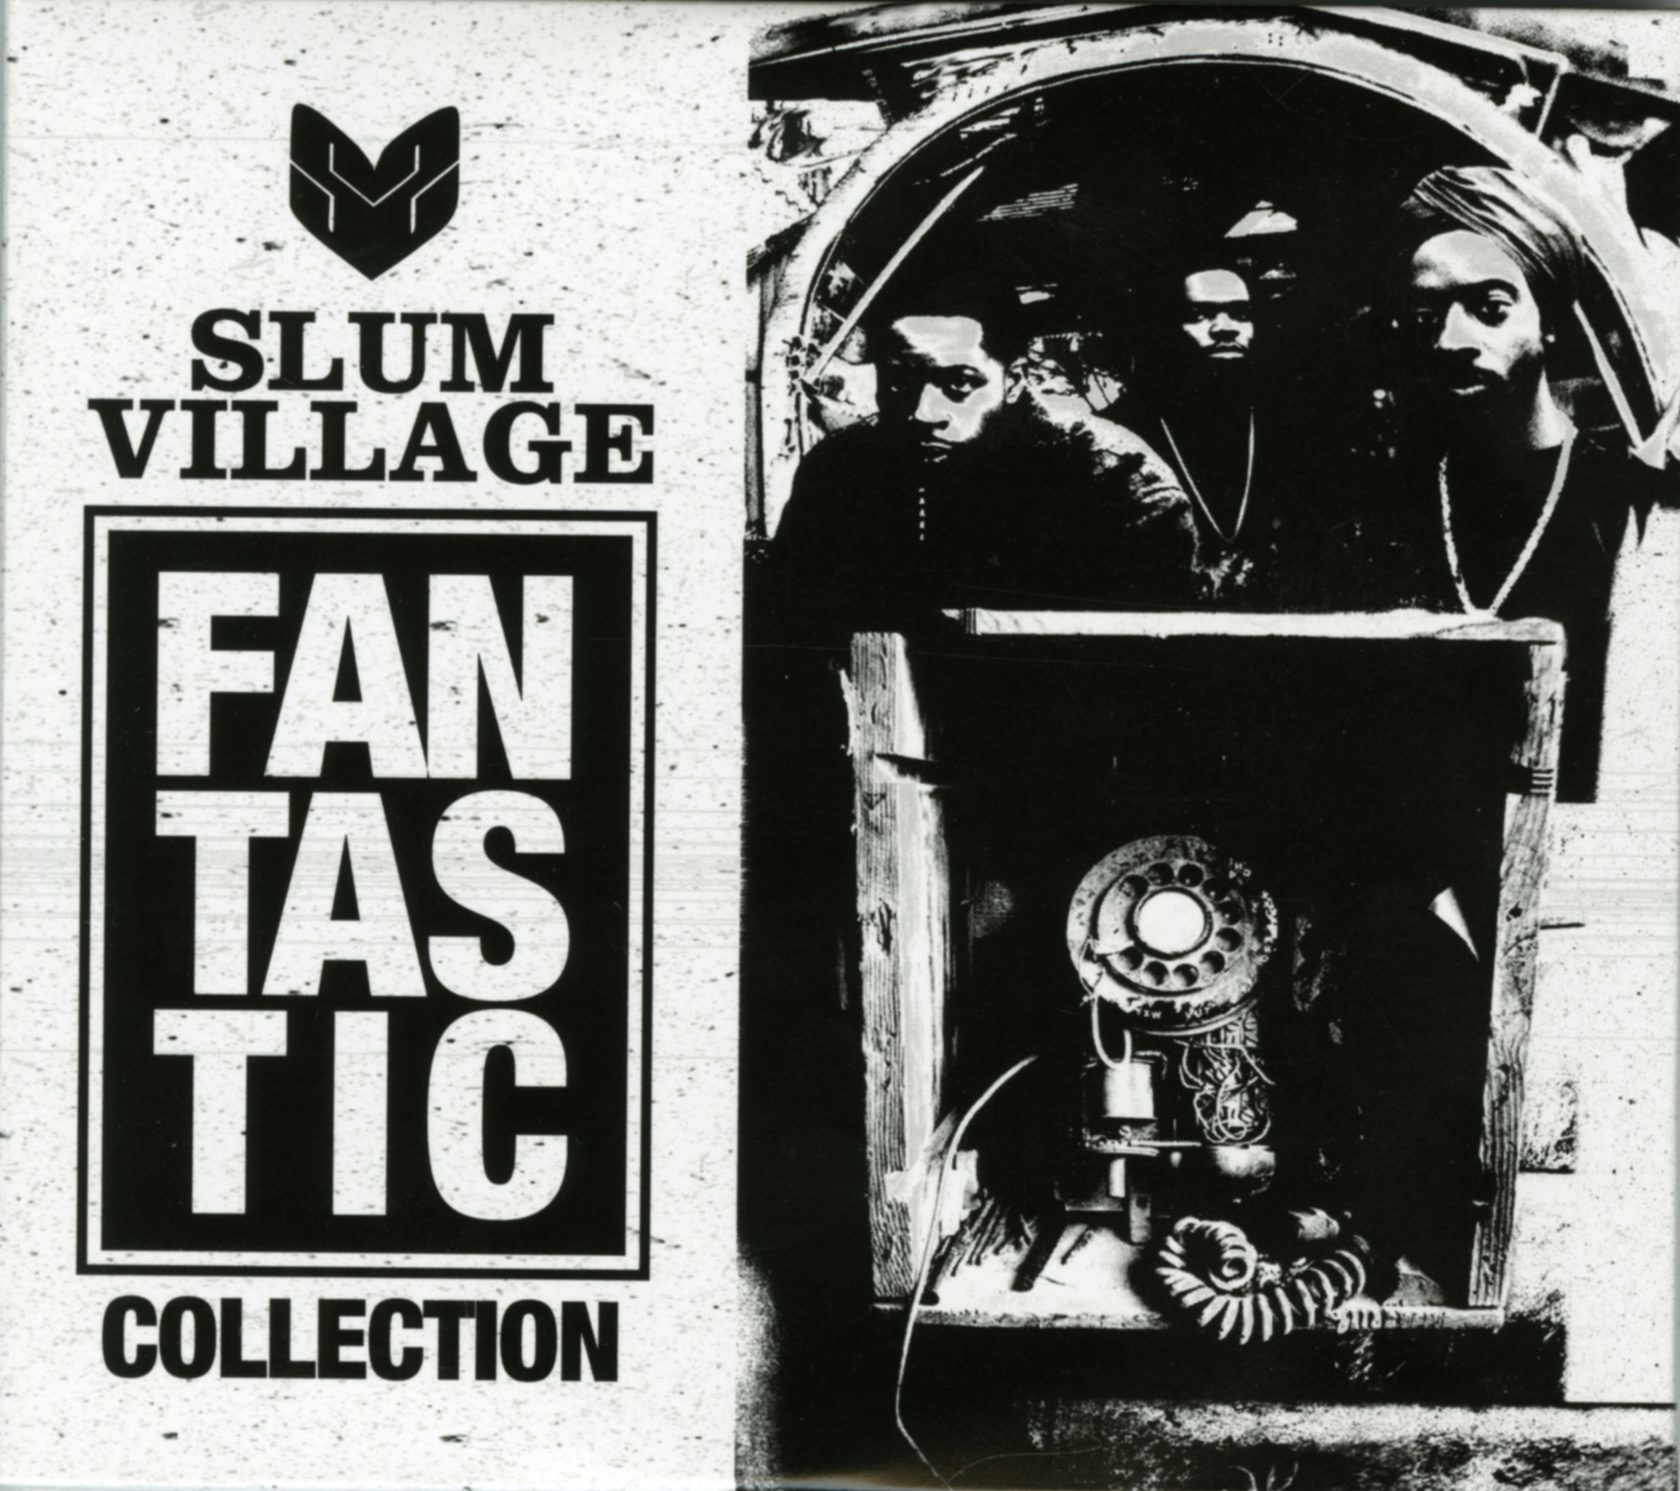 Slum Village FANTASTIC COLLECTION CD